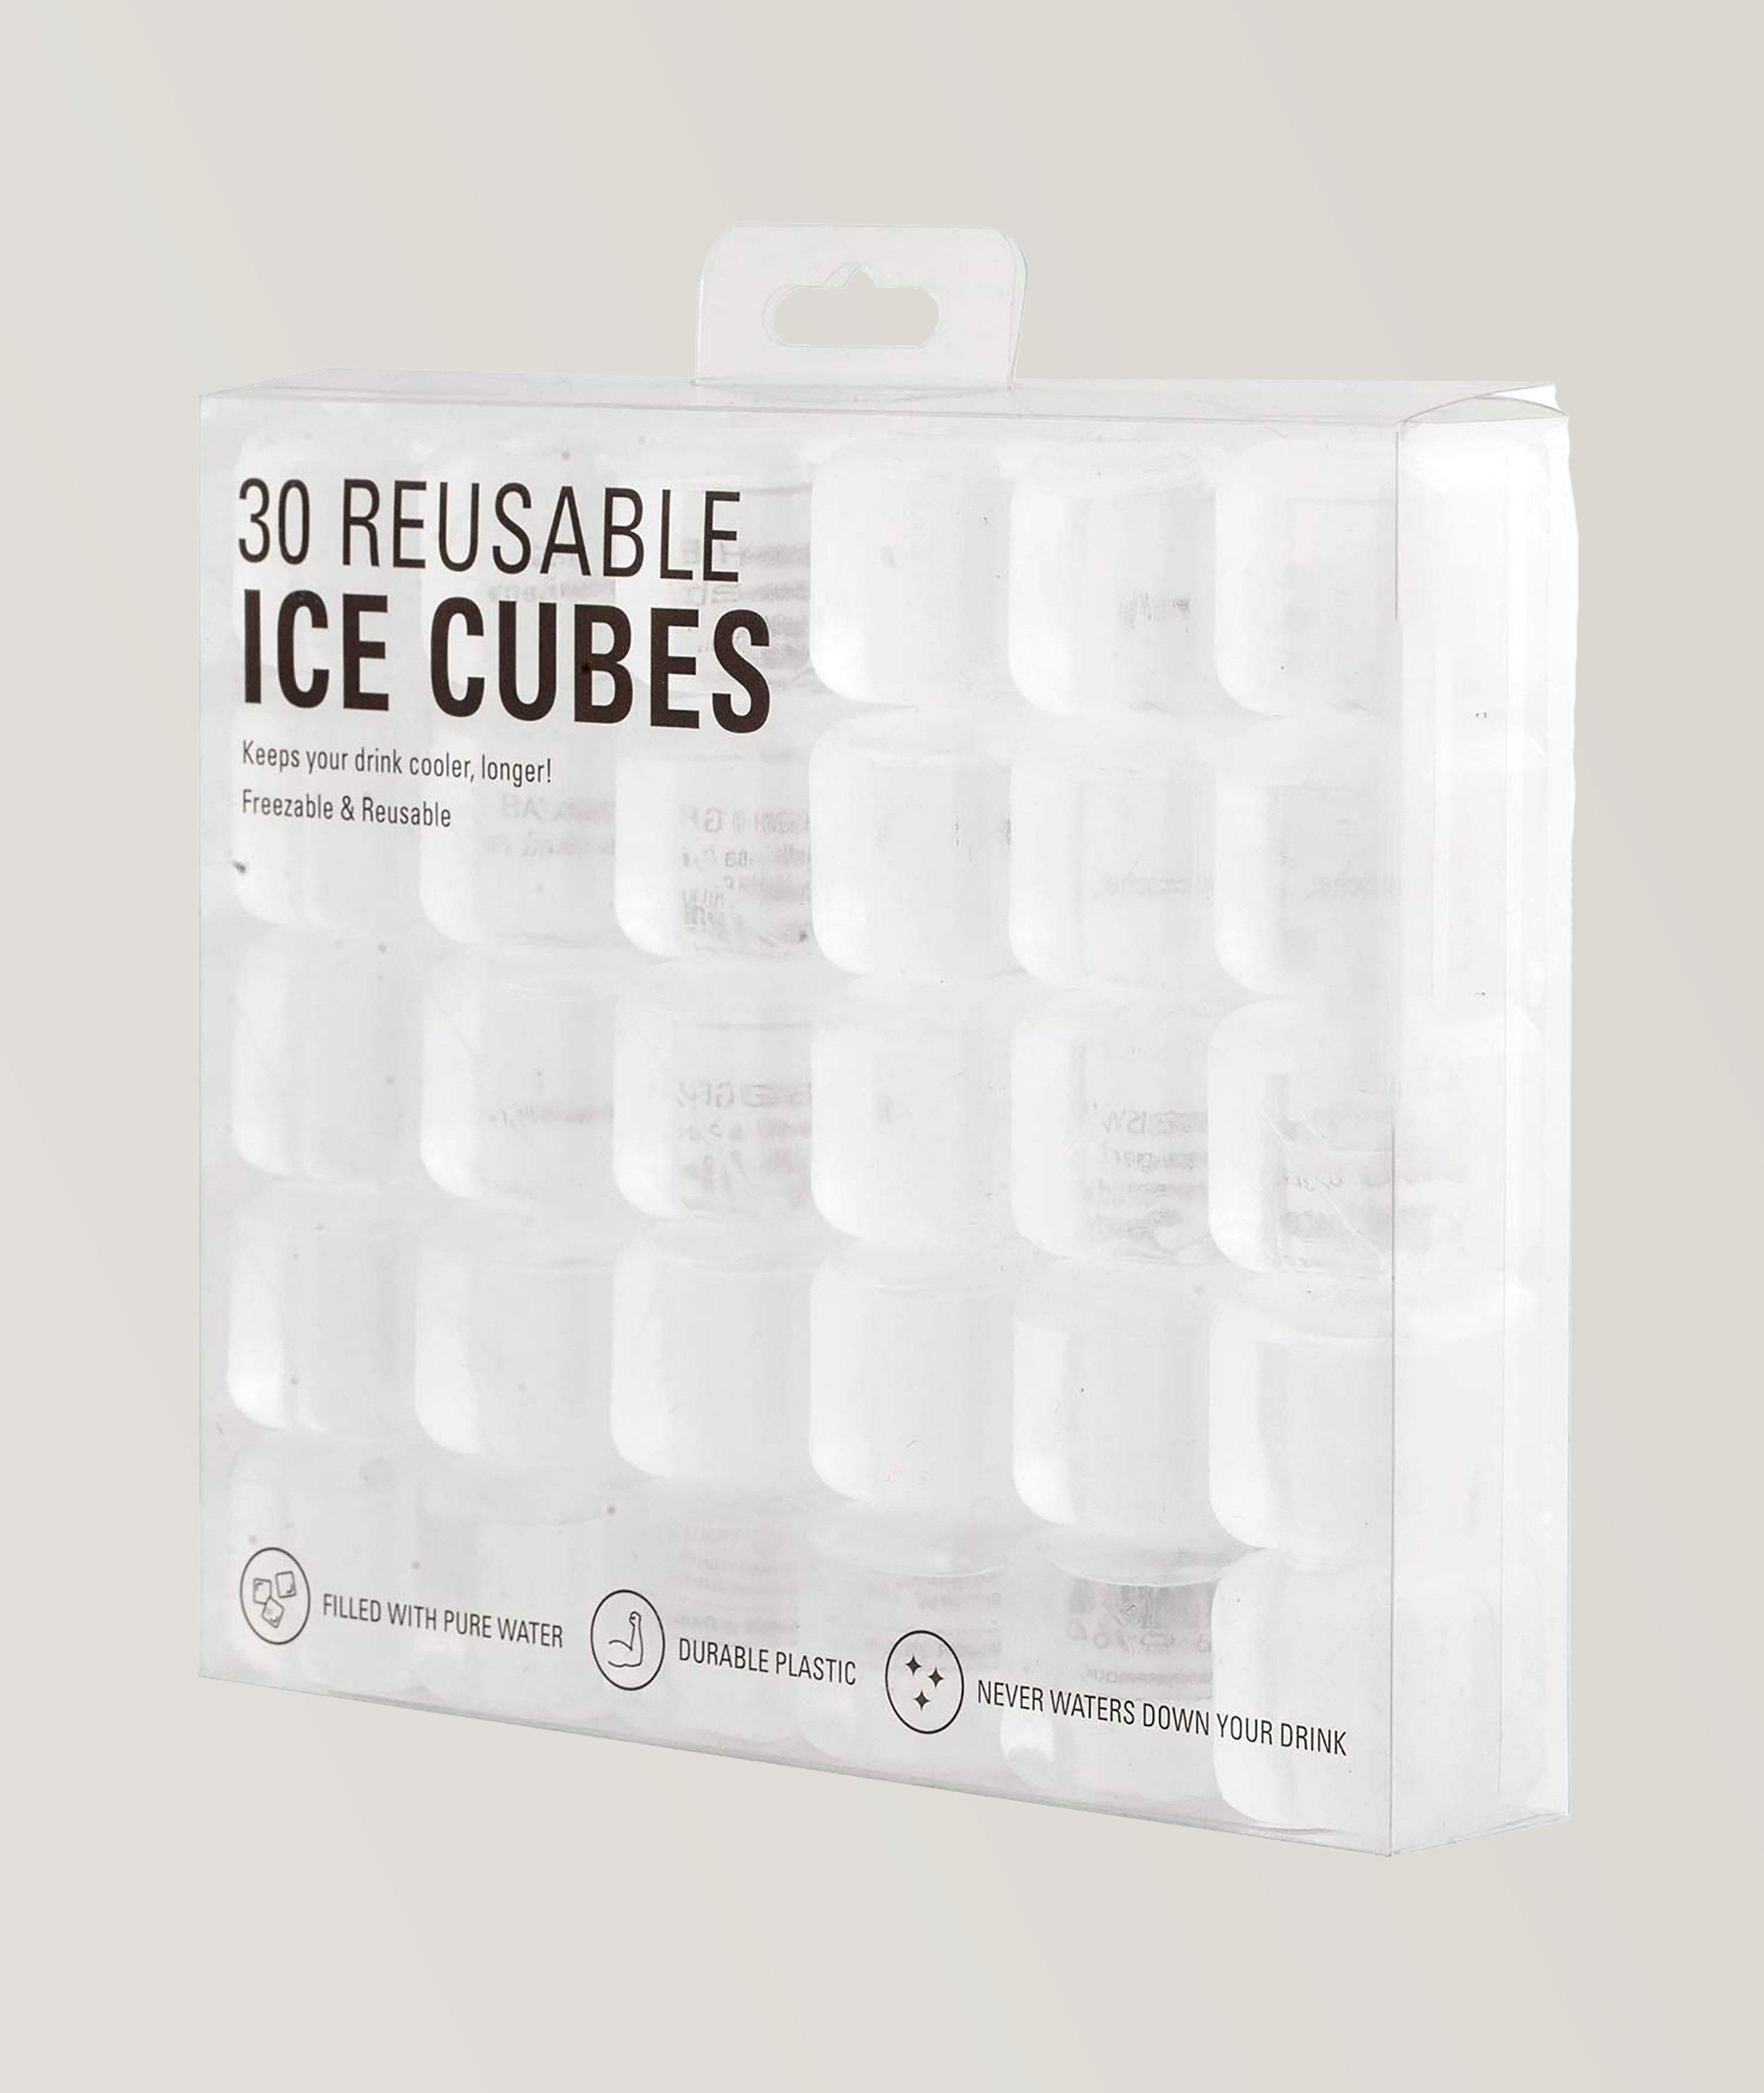 Reusable Ice Cubes - 30 Pieces